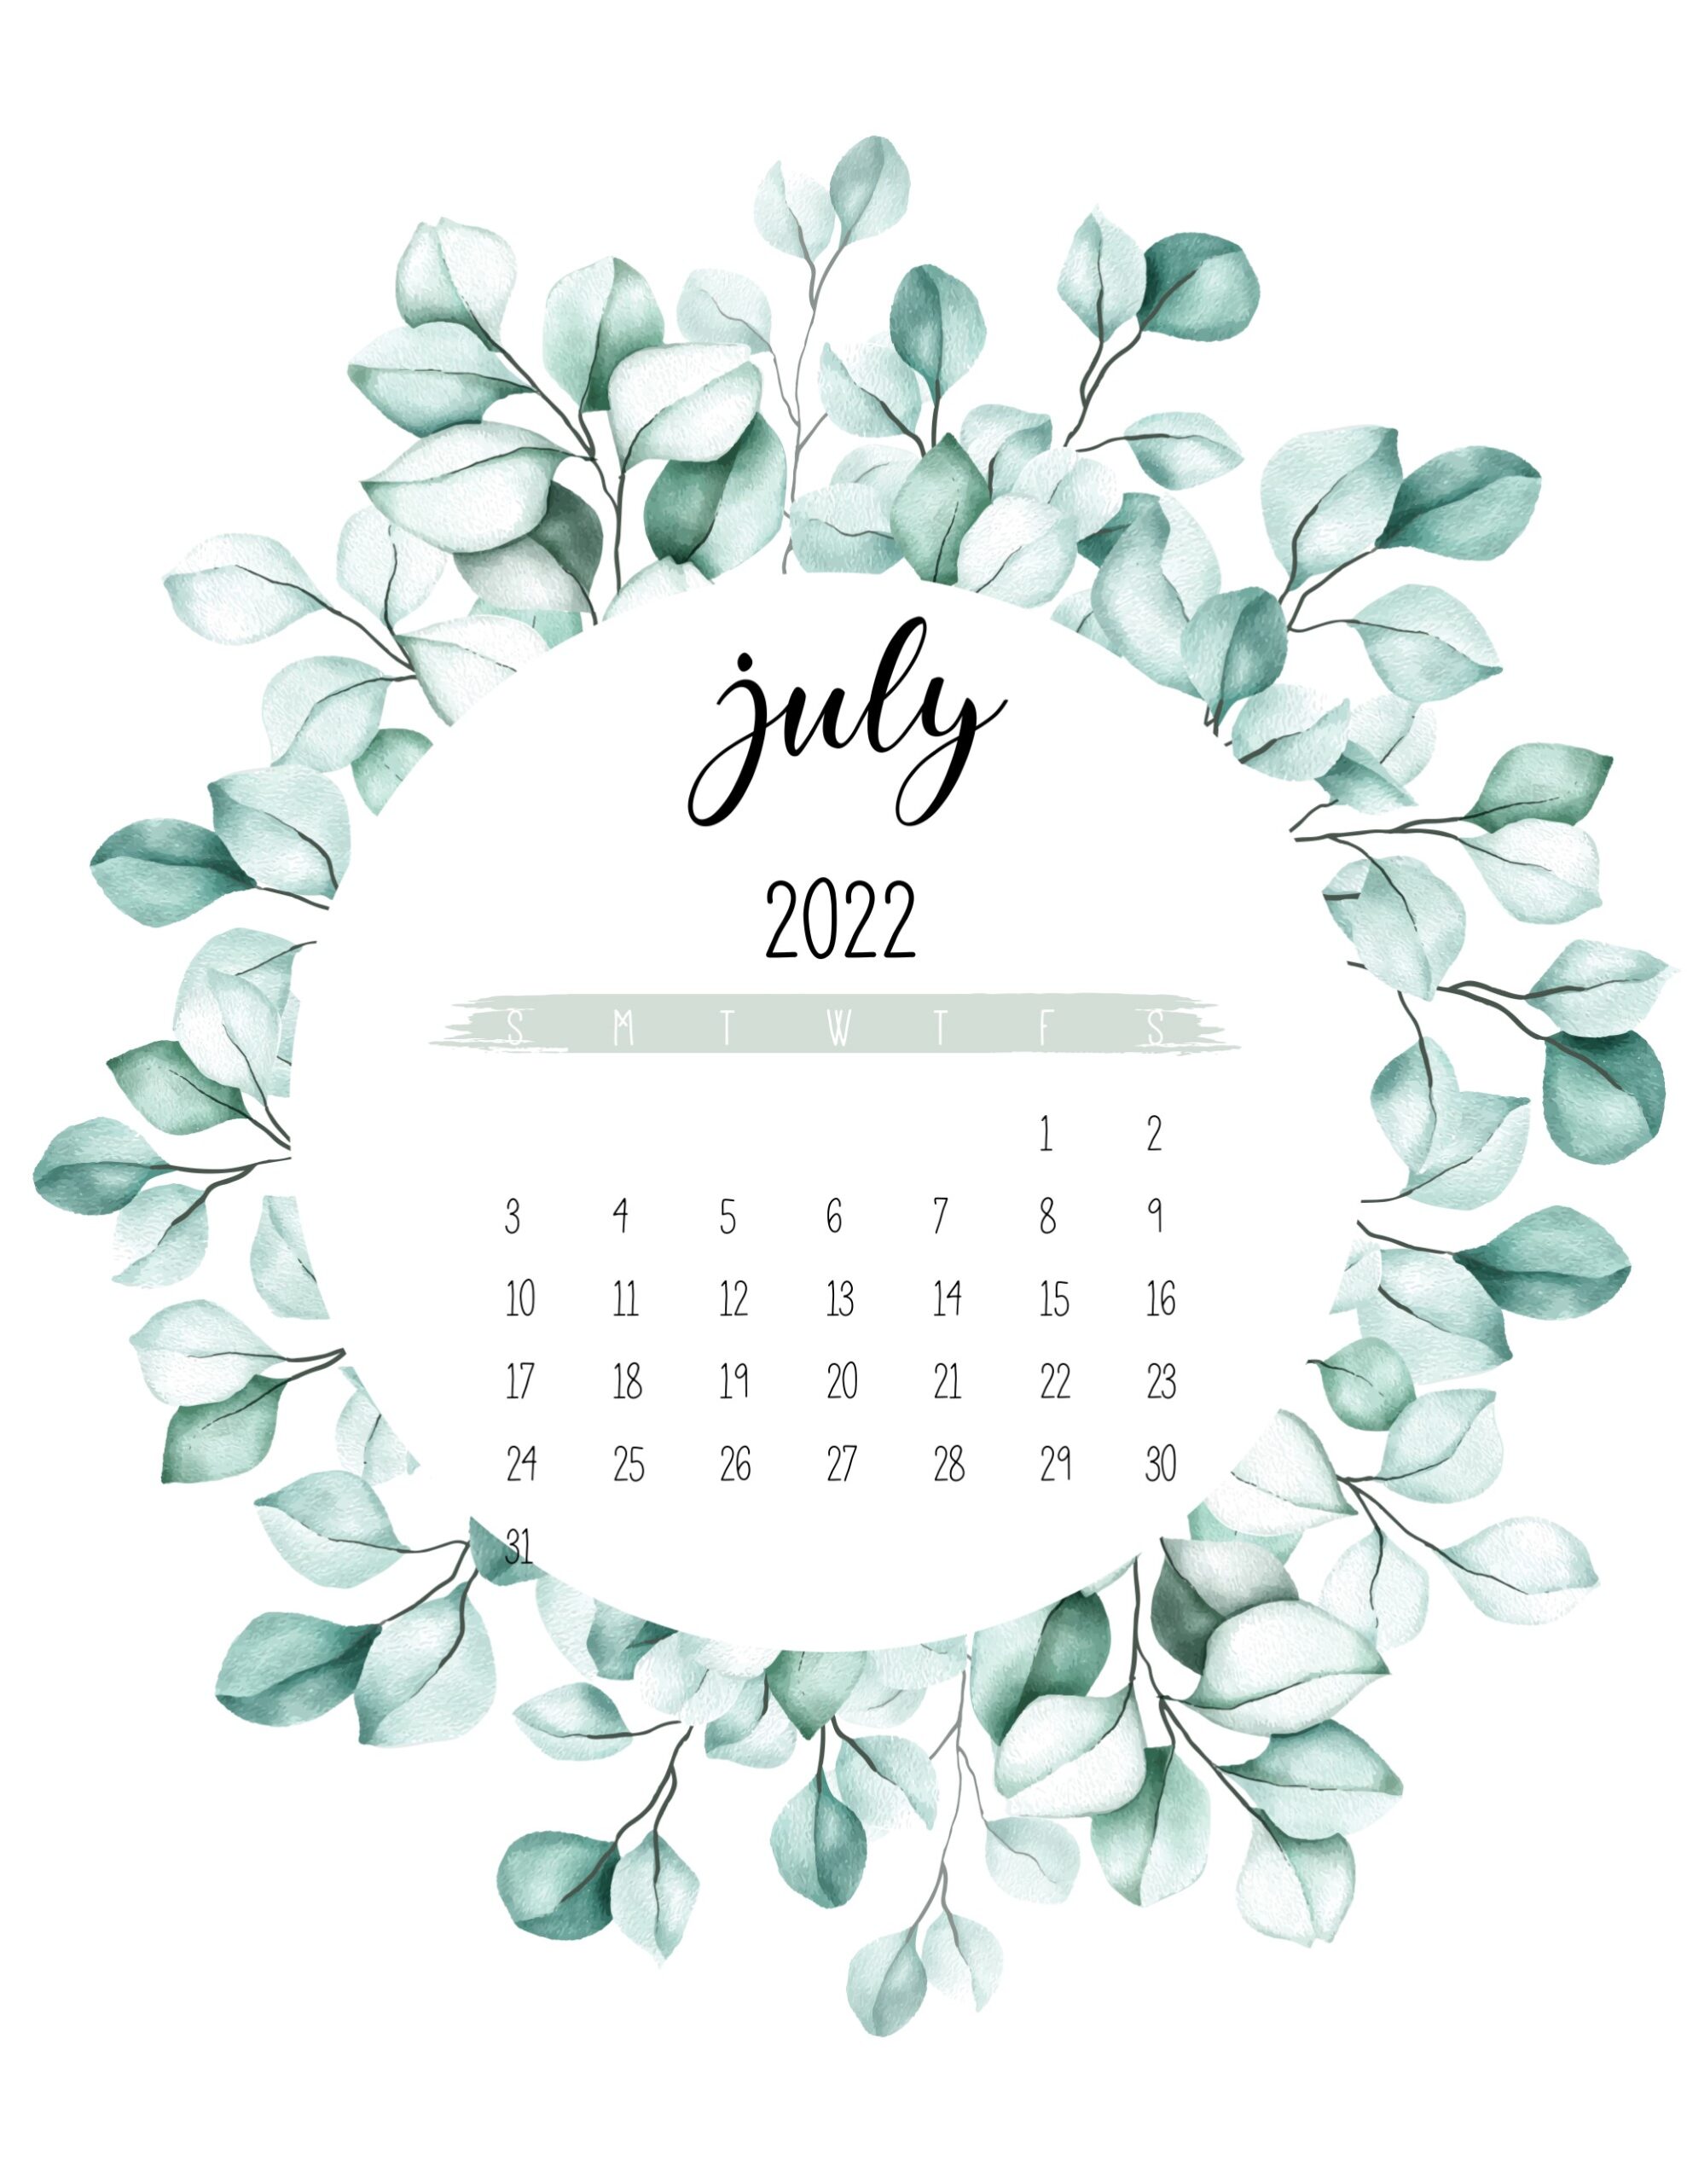 calendario 2022 circulo de folhas julho